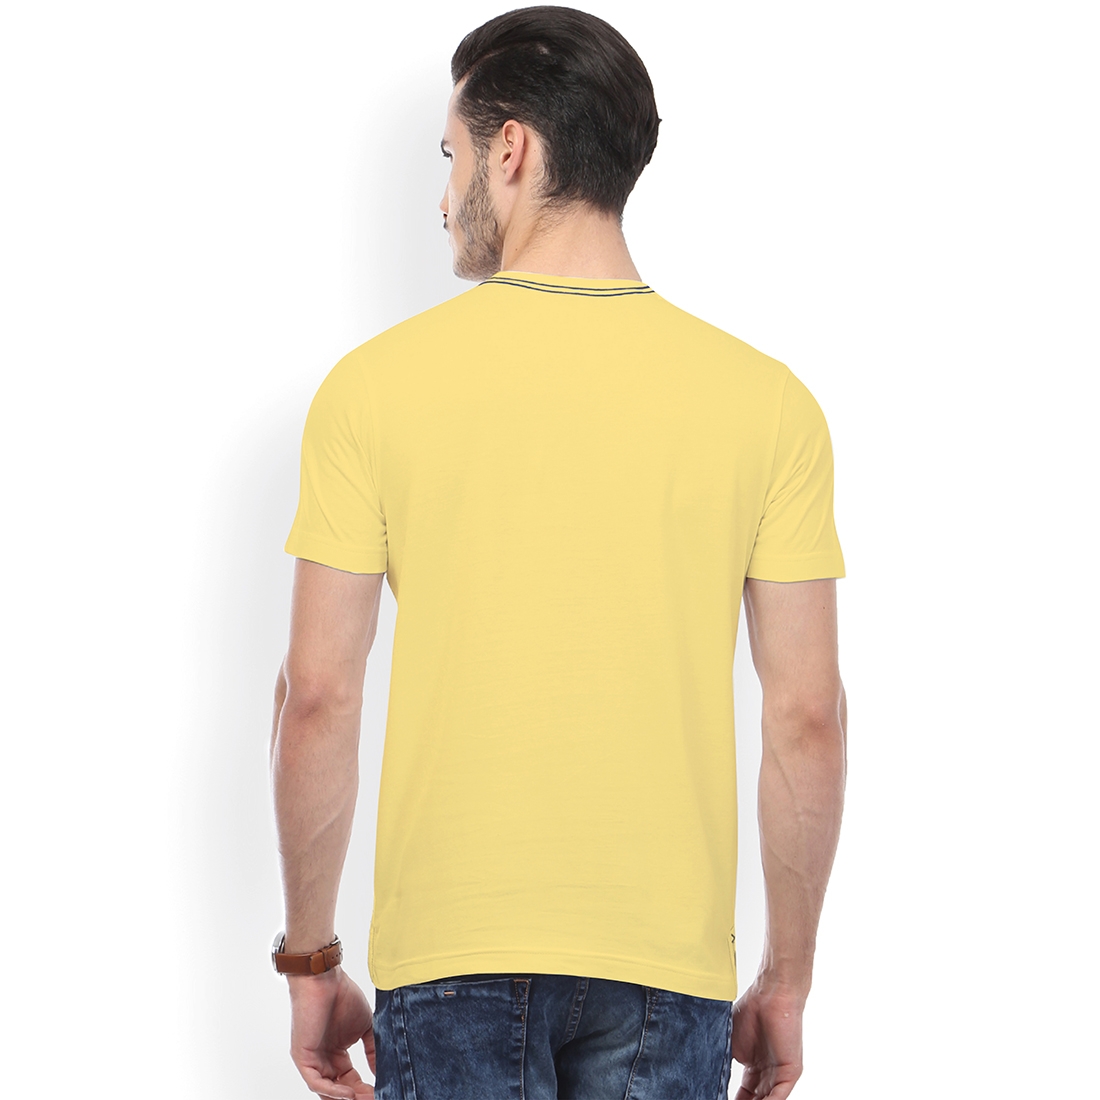 HUETRAP | Huetrap Men's Graphic Round Neck Short Sleeve Yellow T-Shirt 1